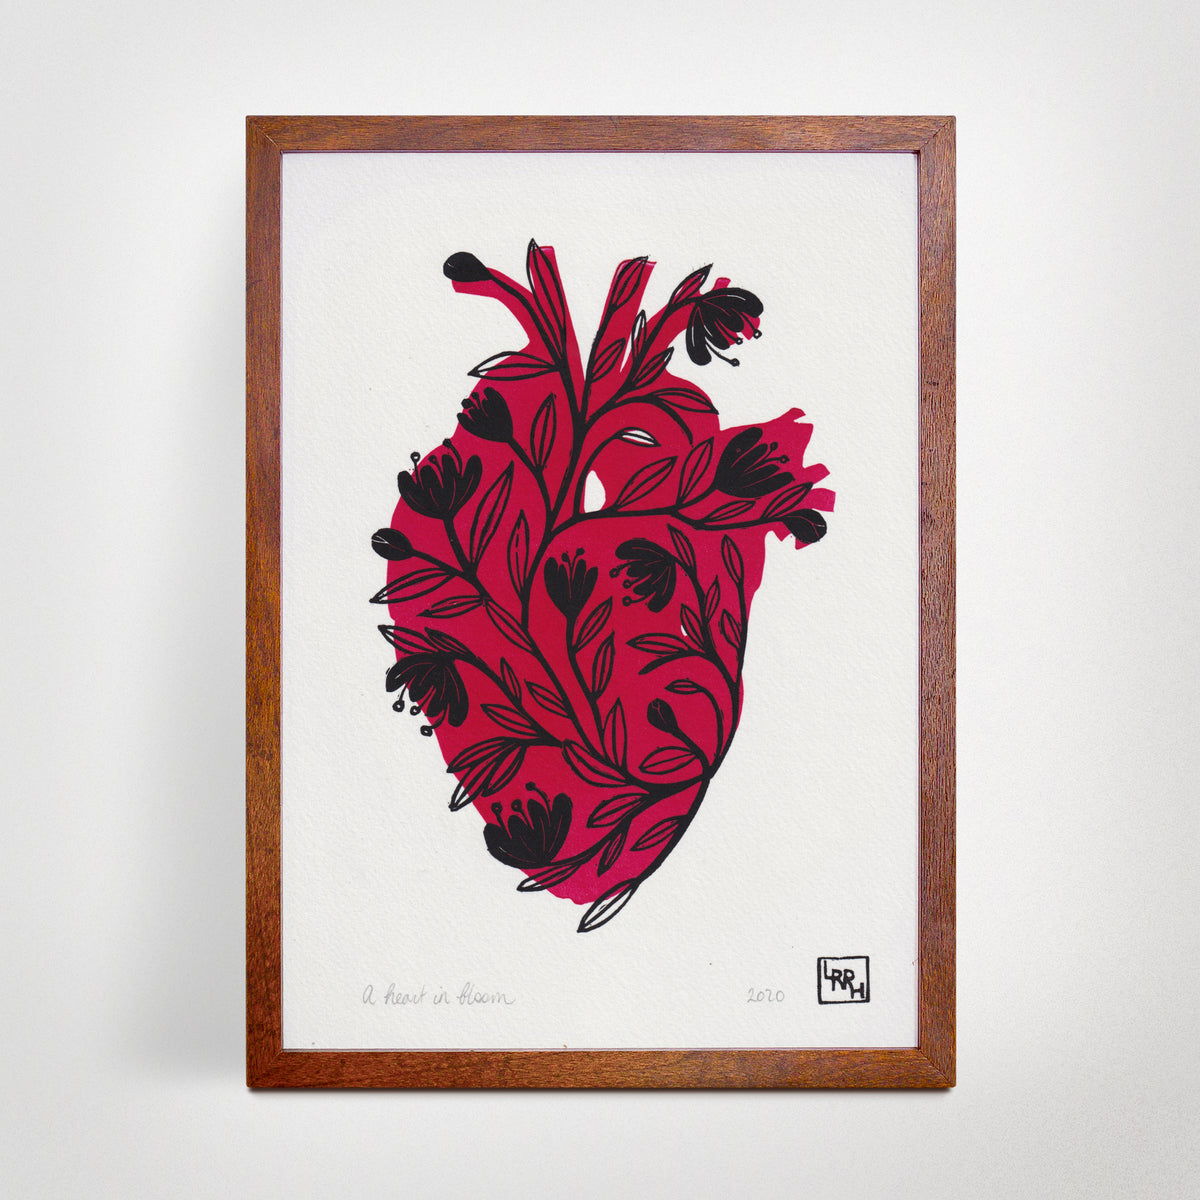 Flowers and heart linoprint, original artwork, handmade in Sydney